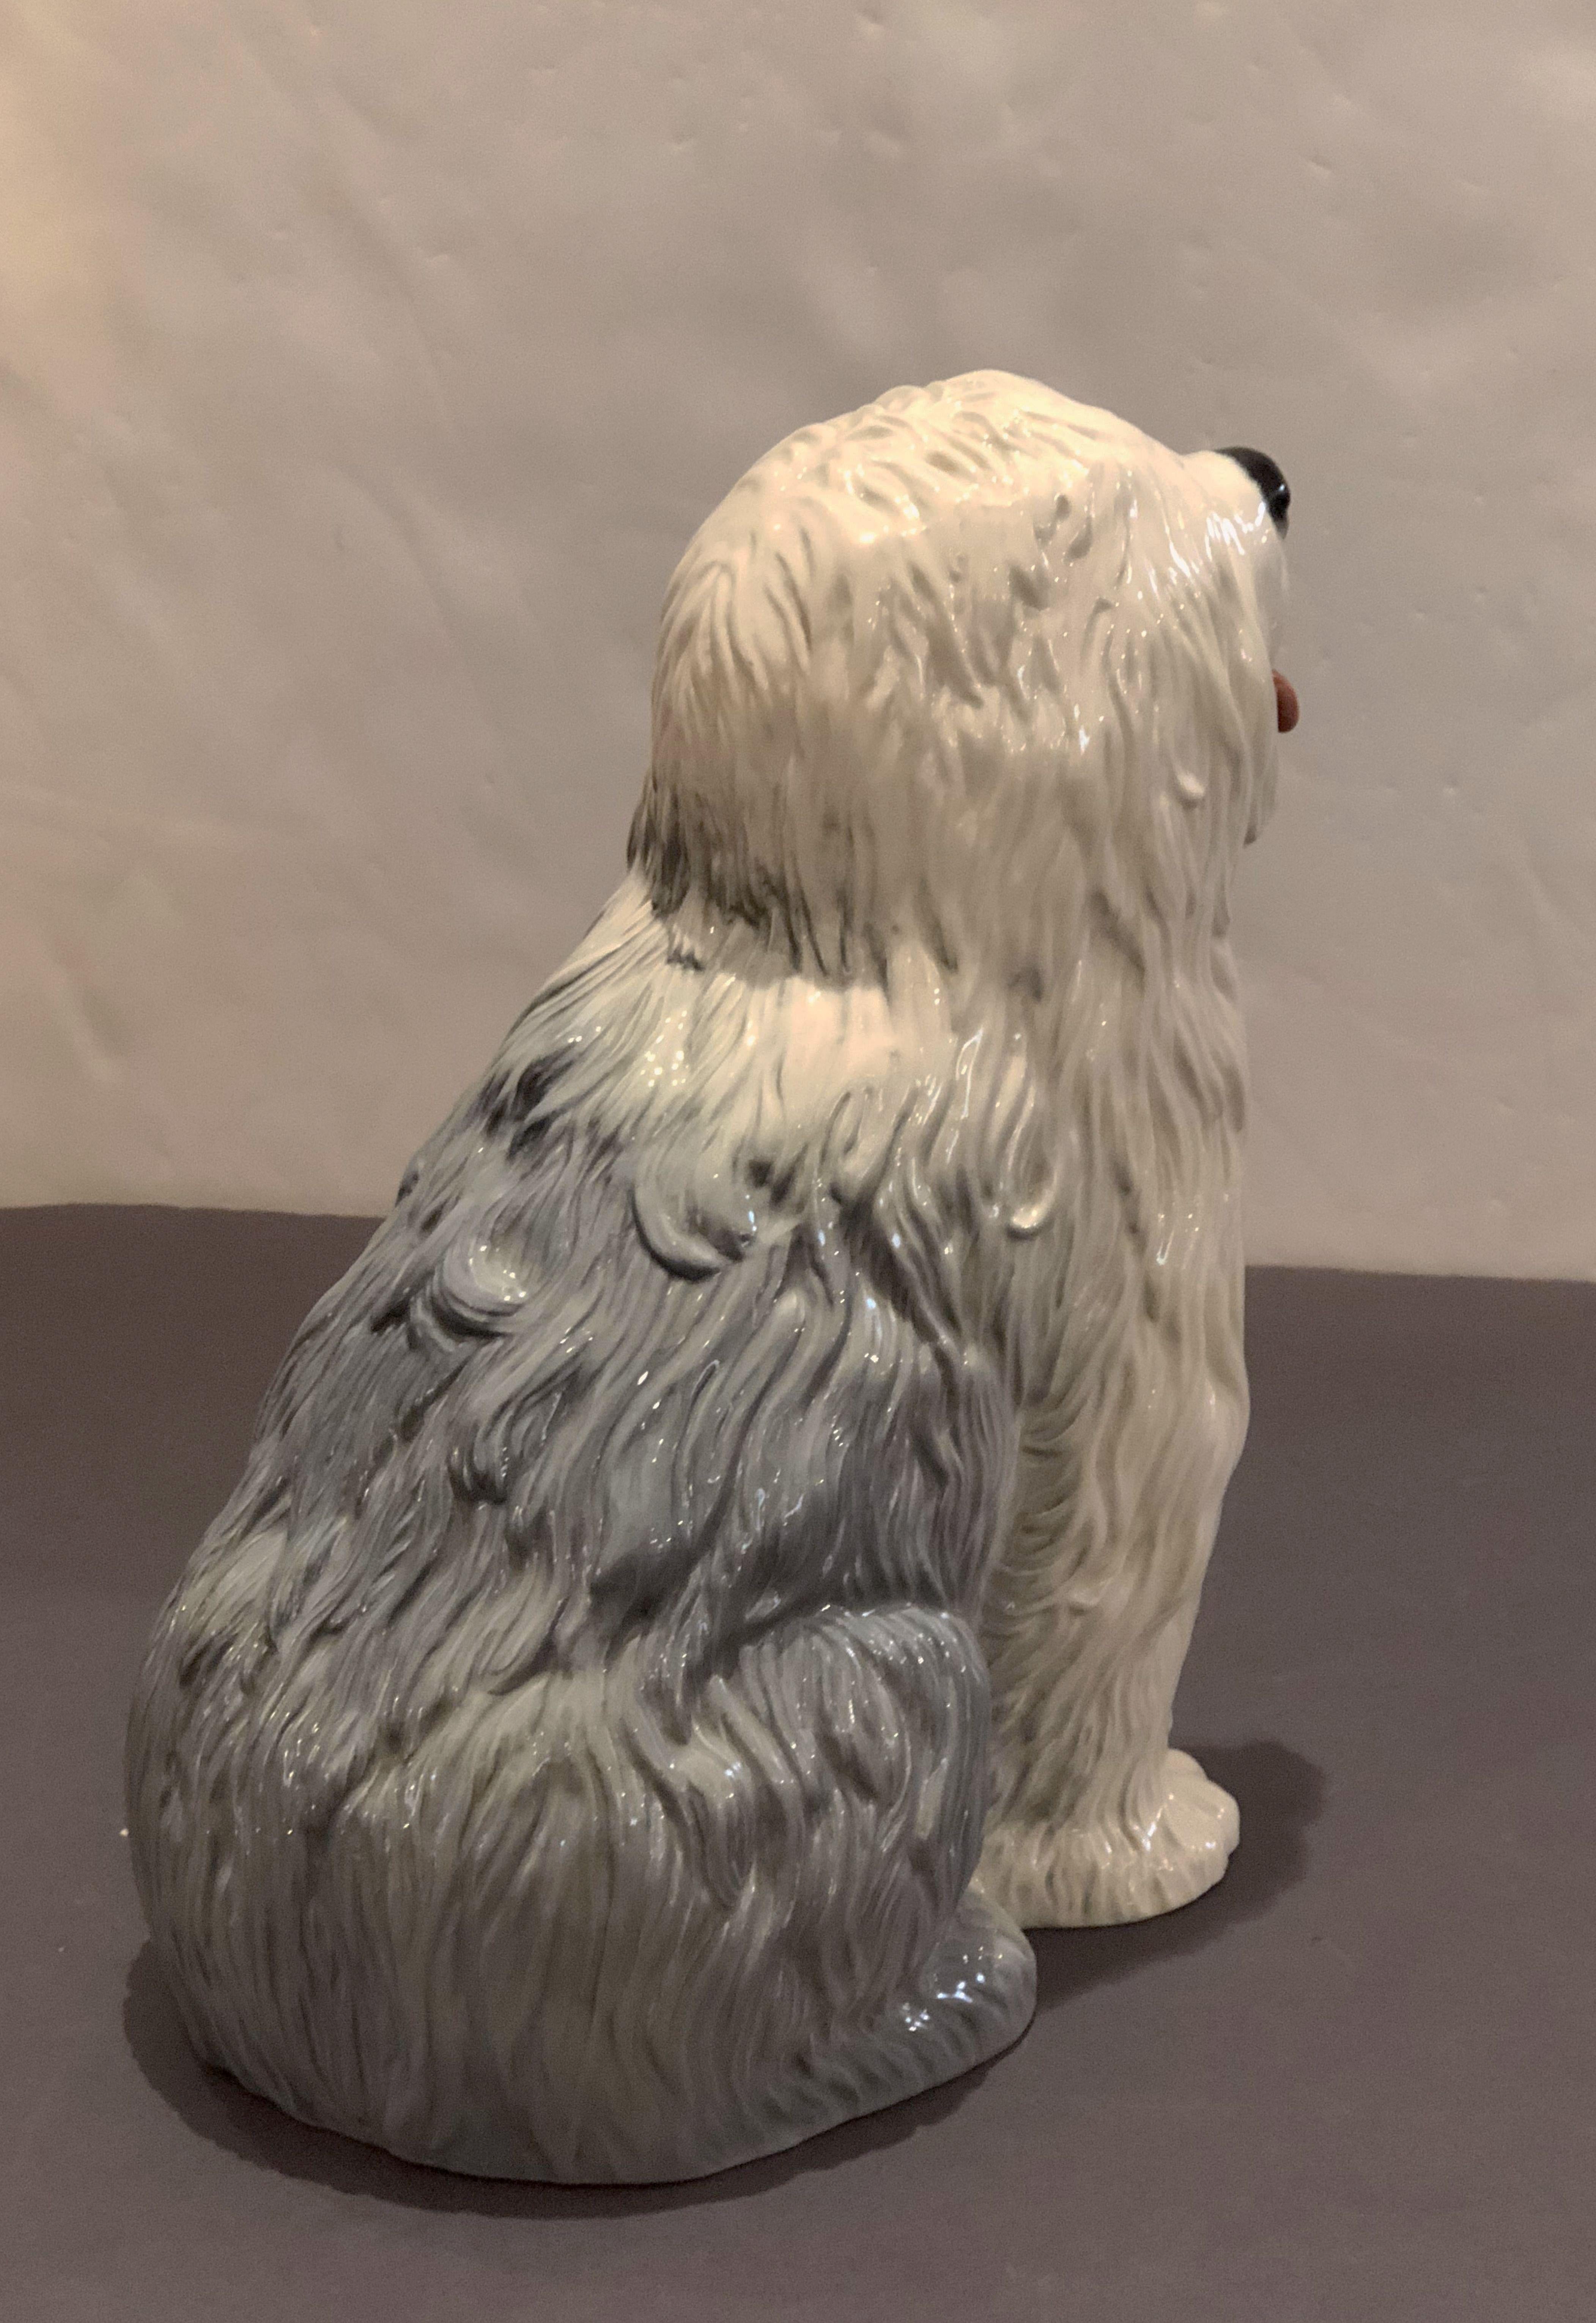 20th Century Old English Sheepdog Model by Beswick Pottery 'Fireside Model'